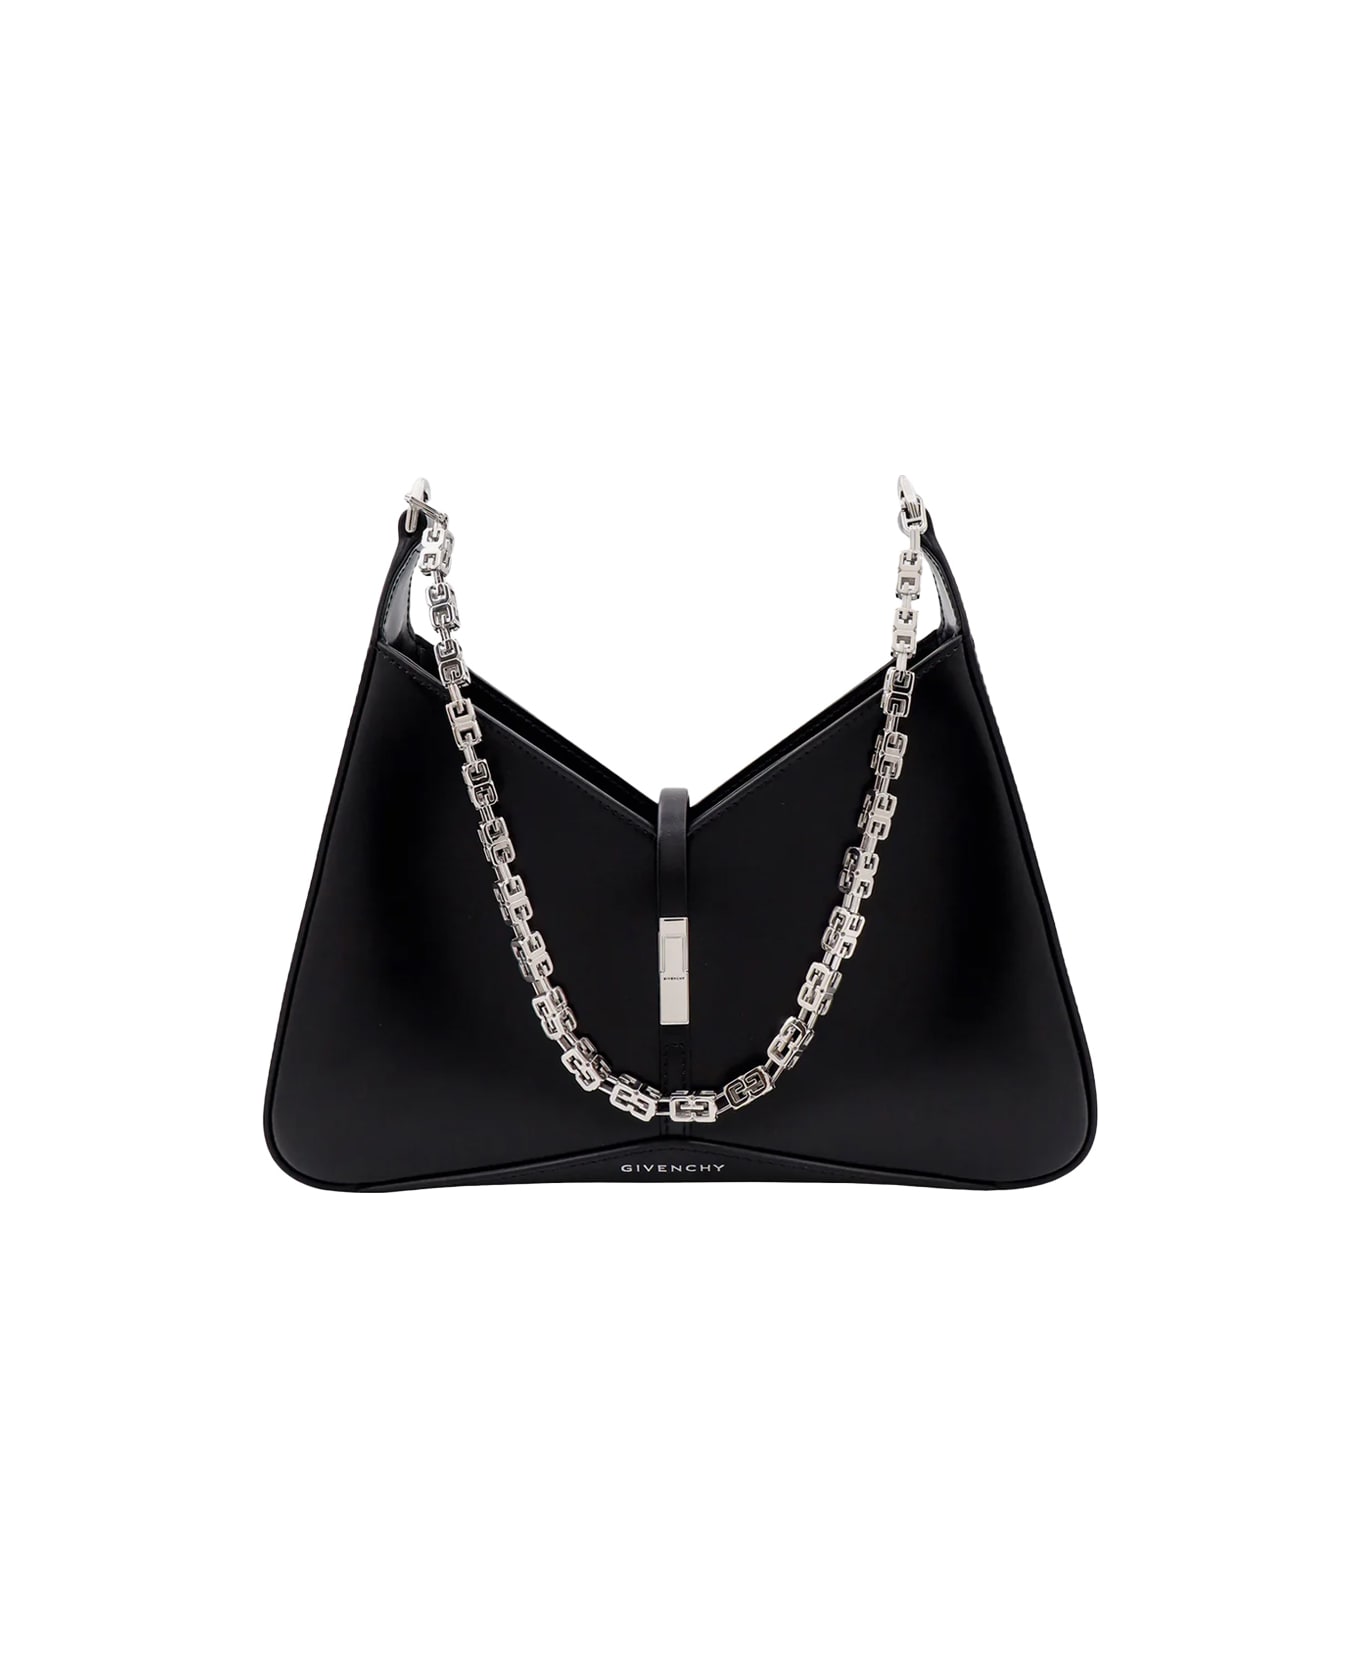 Givenchy Black Cut-out Zipped Shoulder Bag - Black